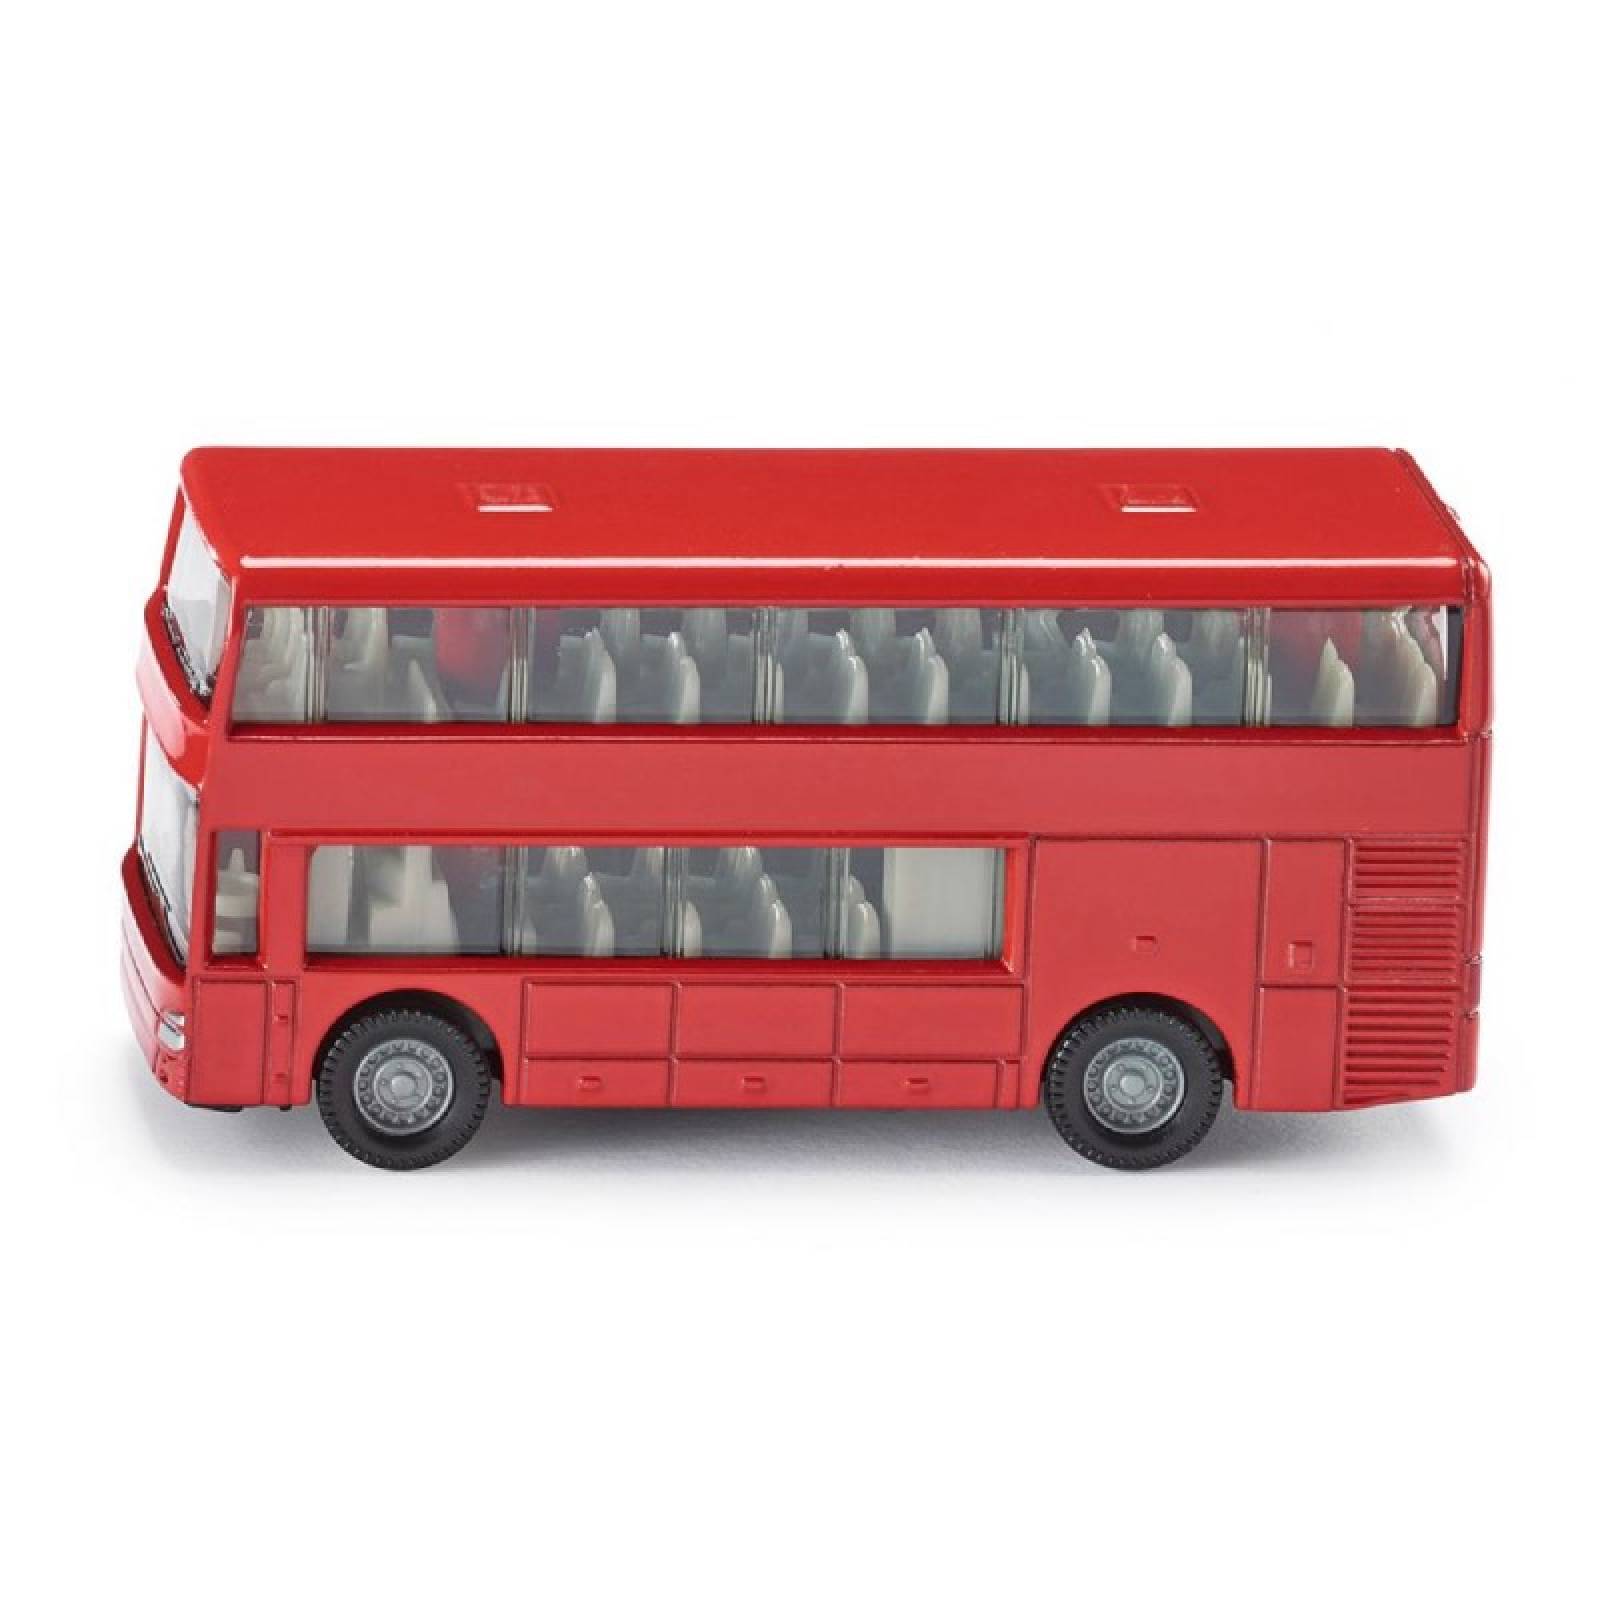 Double Decker Bus - Single Die-Cast Toy Vehicle 1321 3+